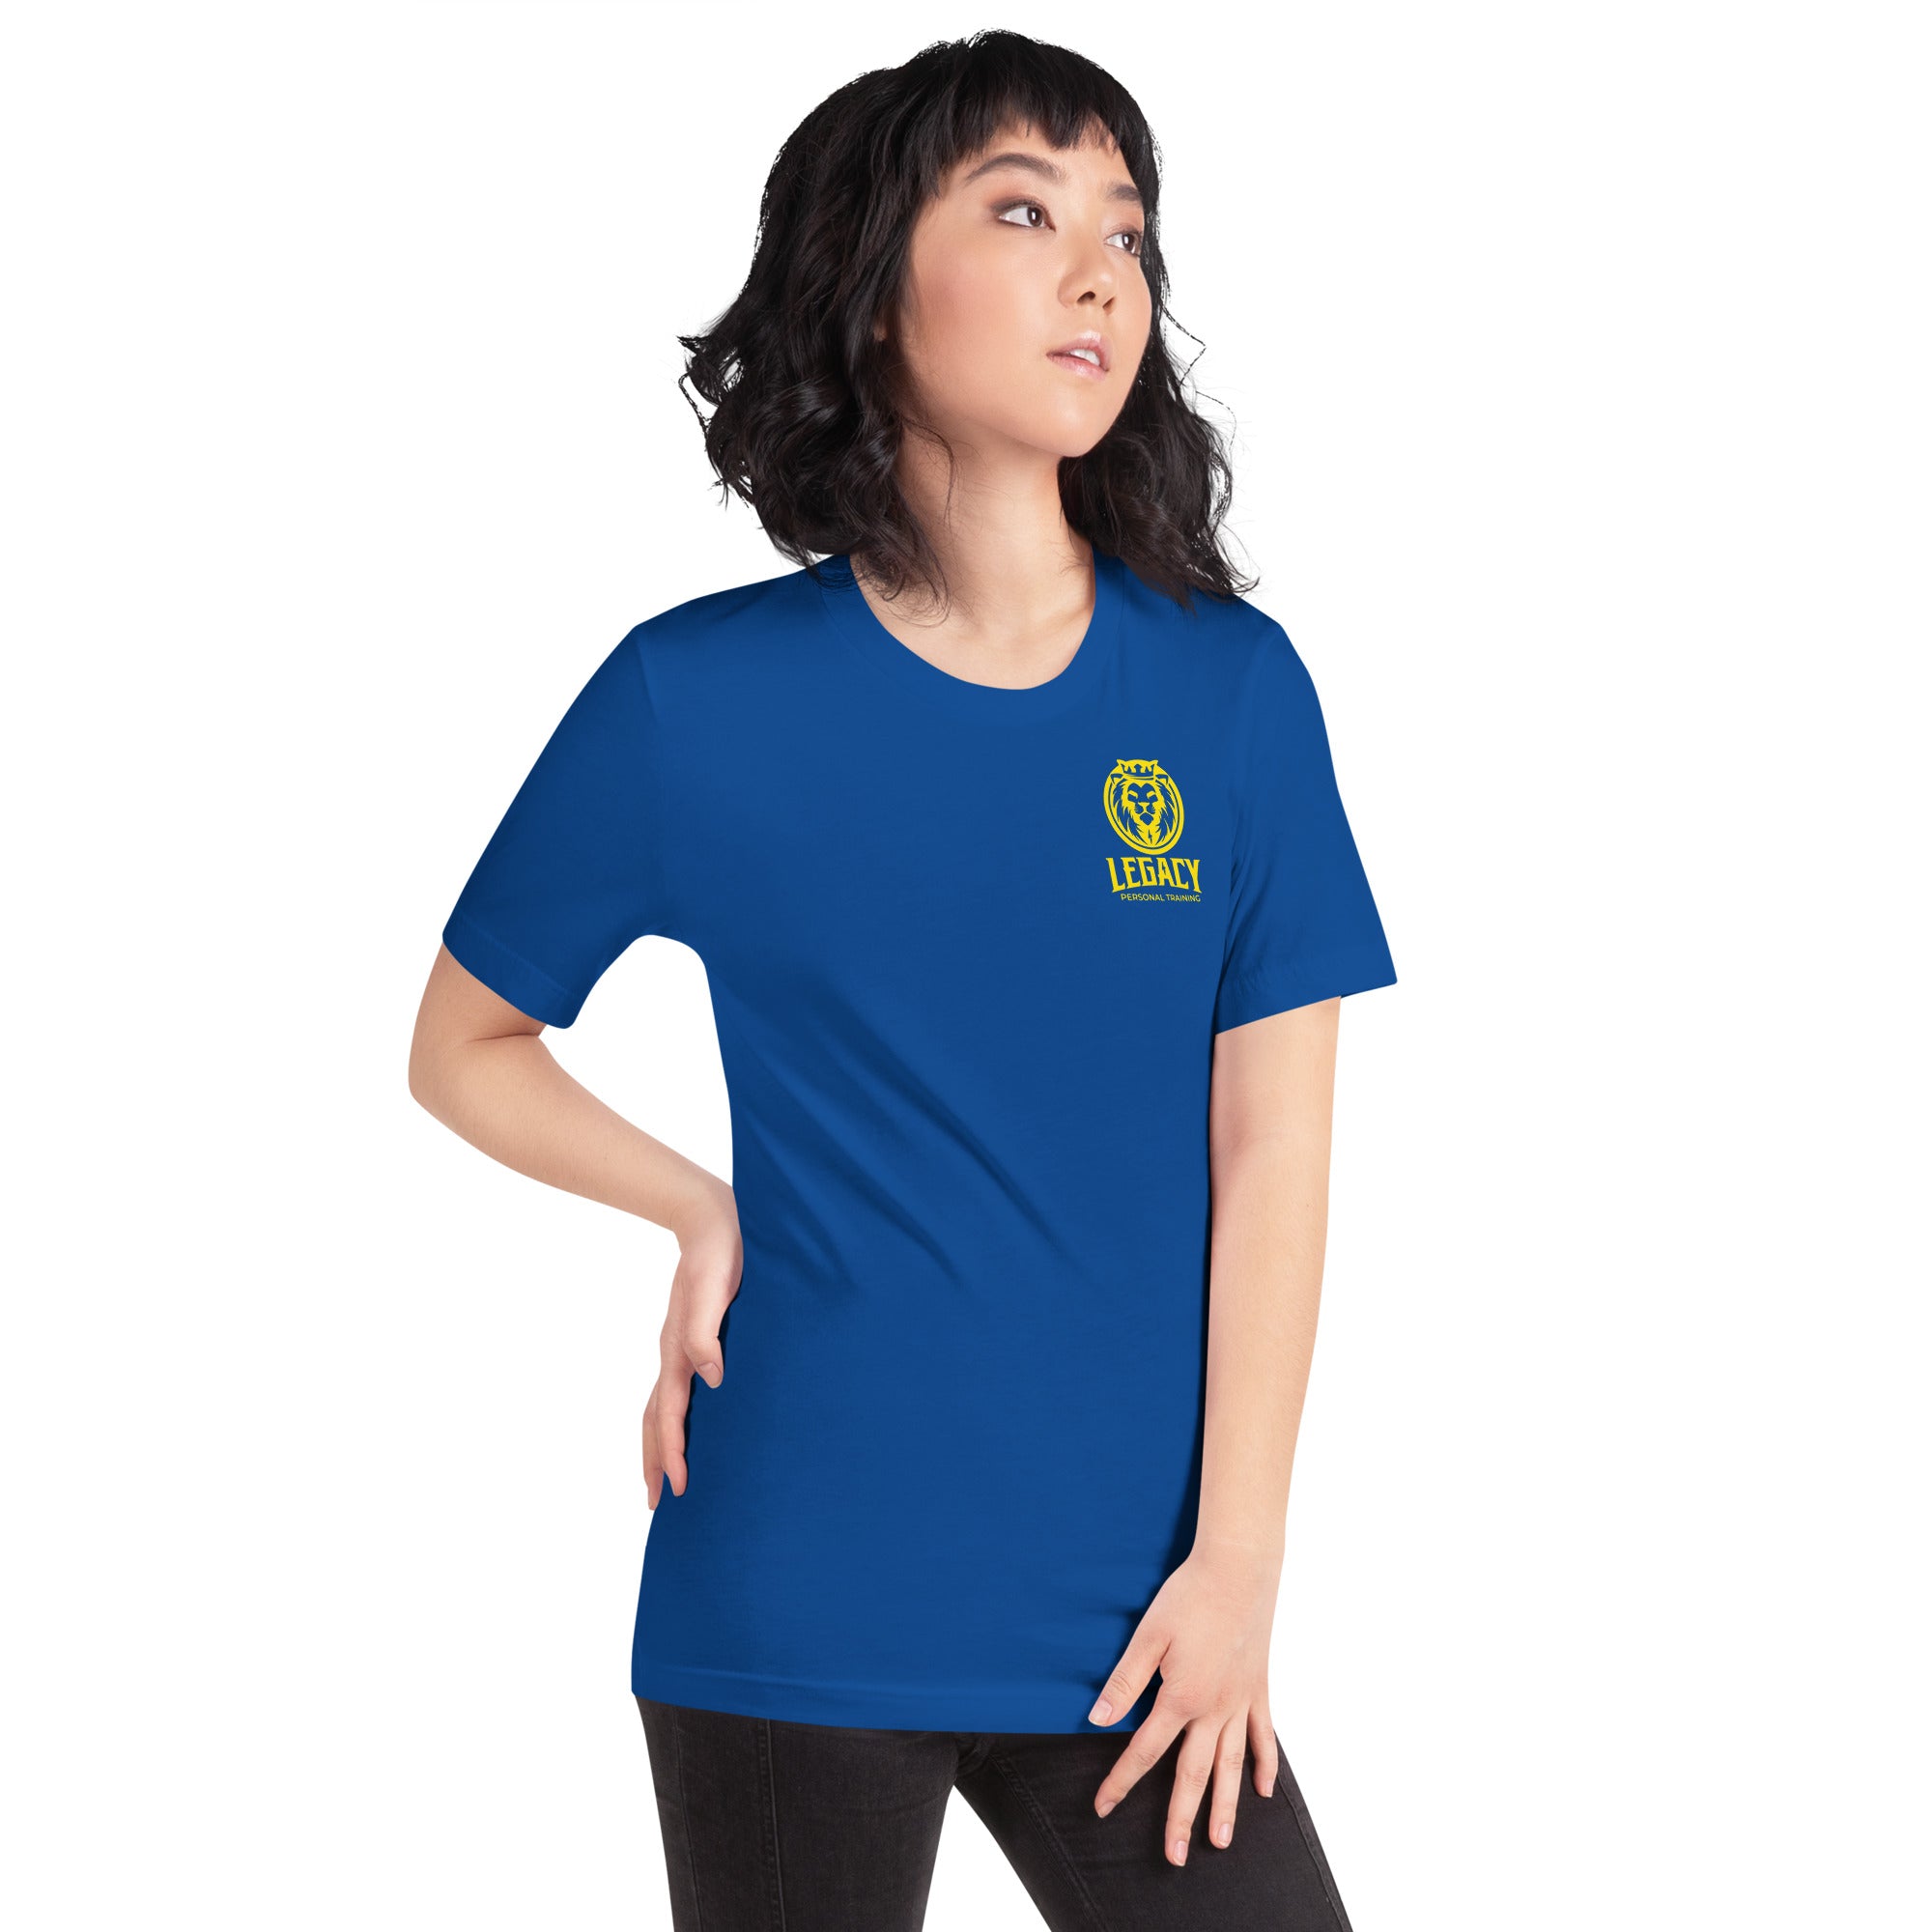 Gold Short-Sleeve Unisex T-Shirt